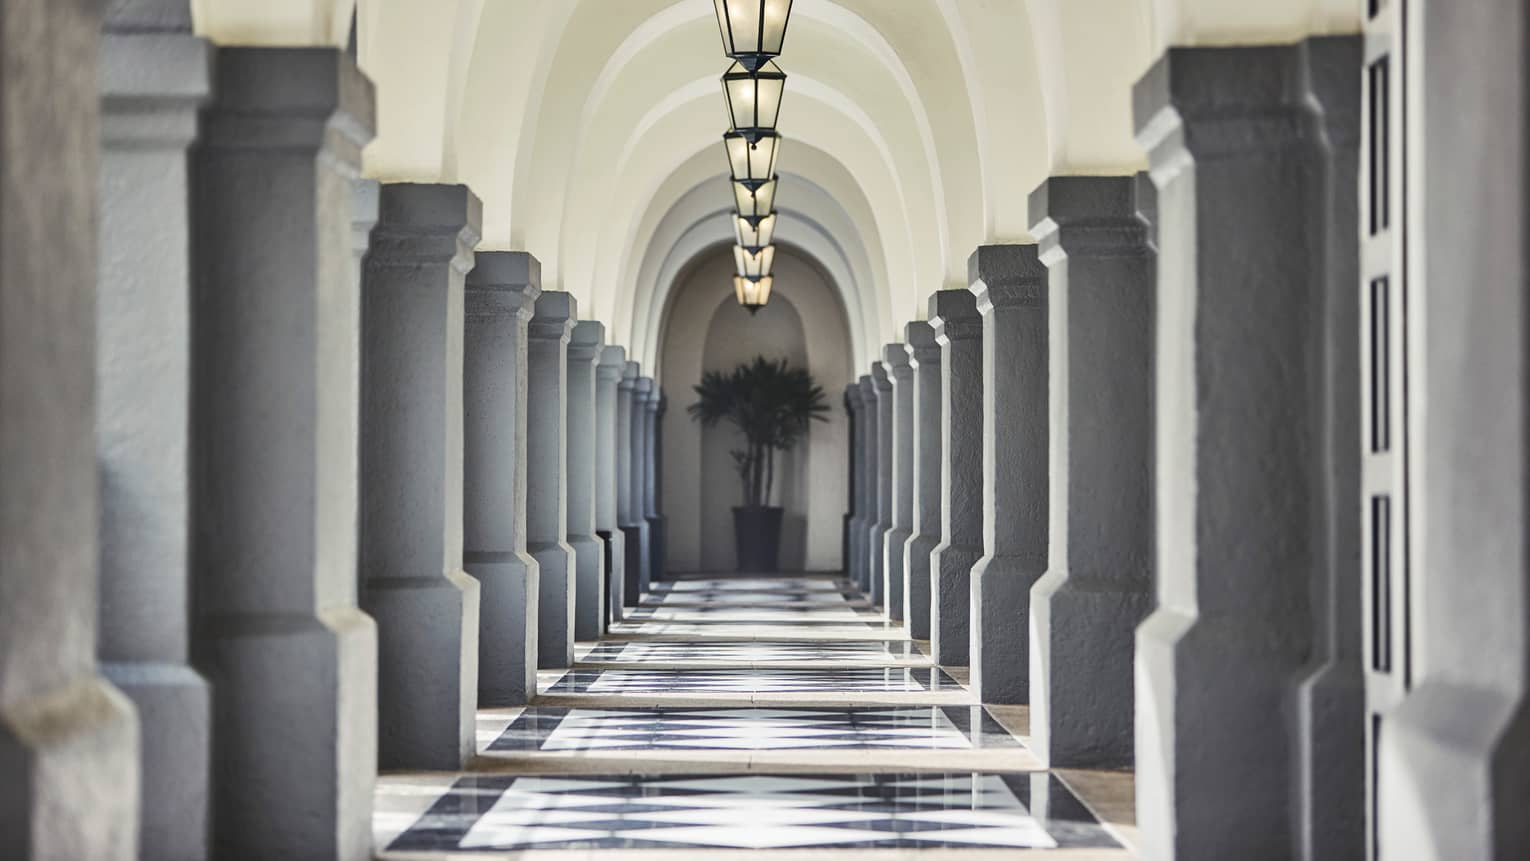 Stone pillars, lanterns down long, sunny outdoor hallway